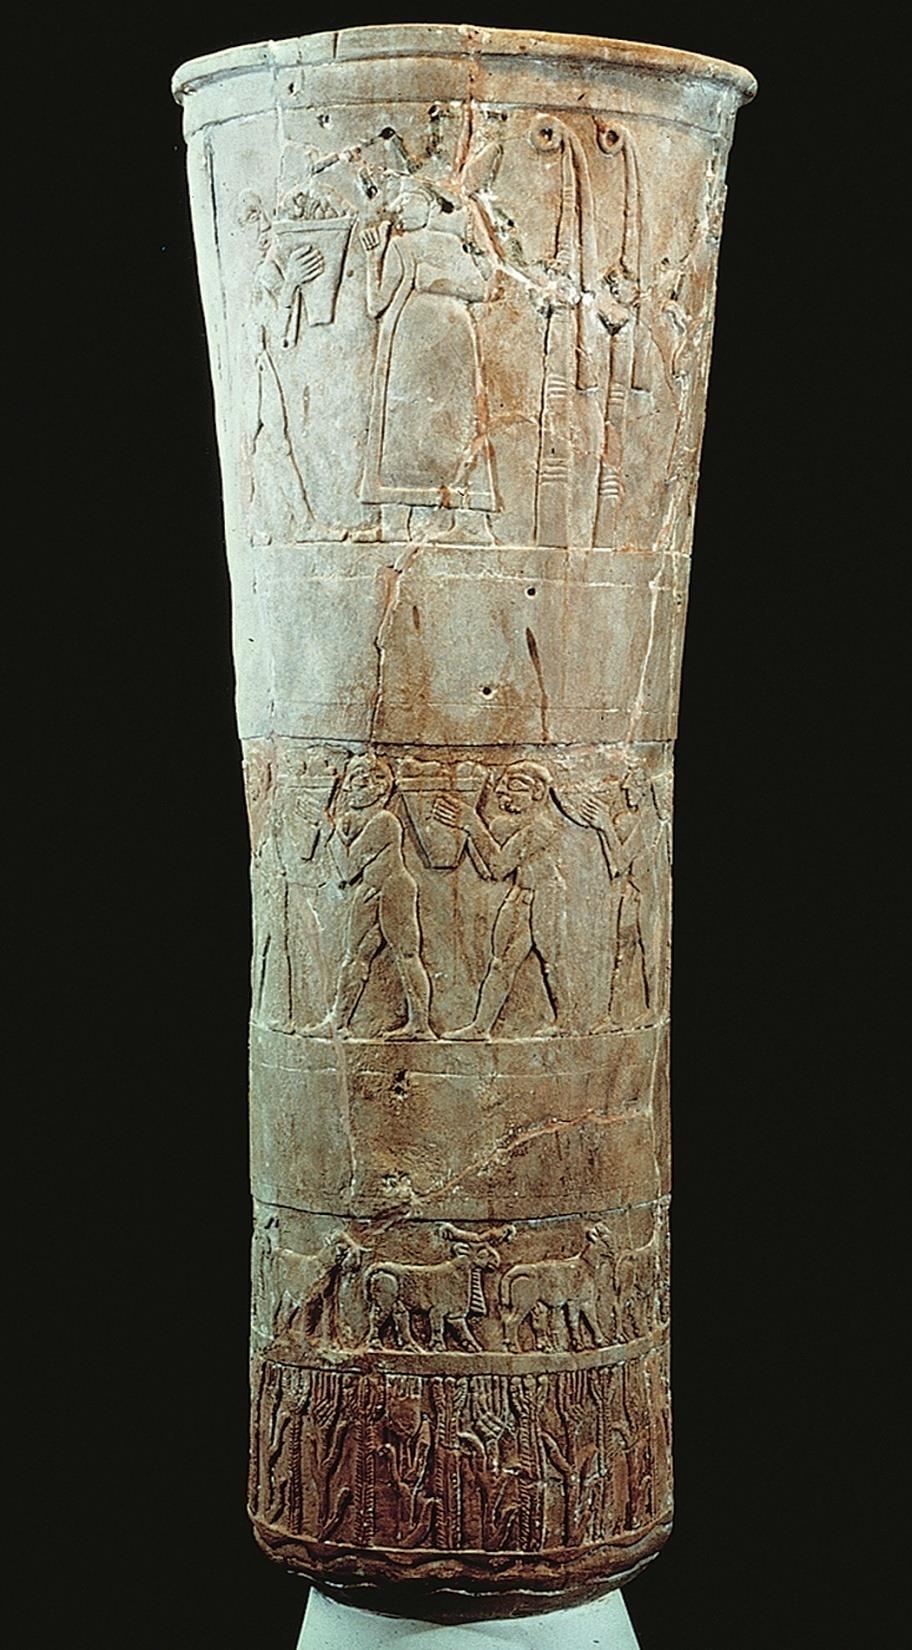 Figure 2-5 Presentation of offerings to Inanna (Warka Vase), from Uruk (modern